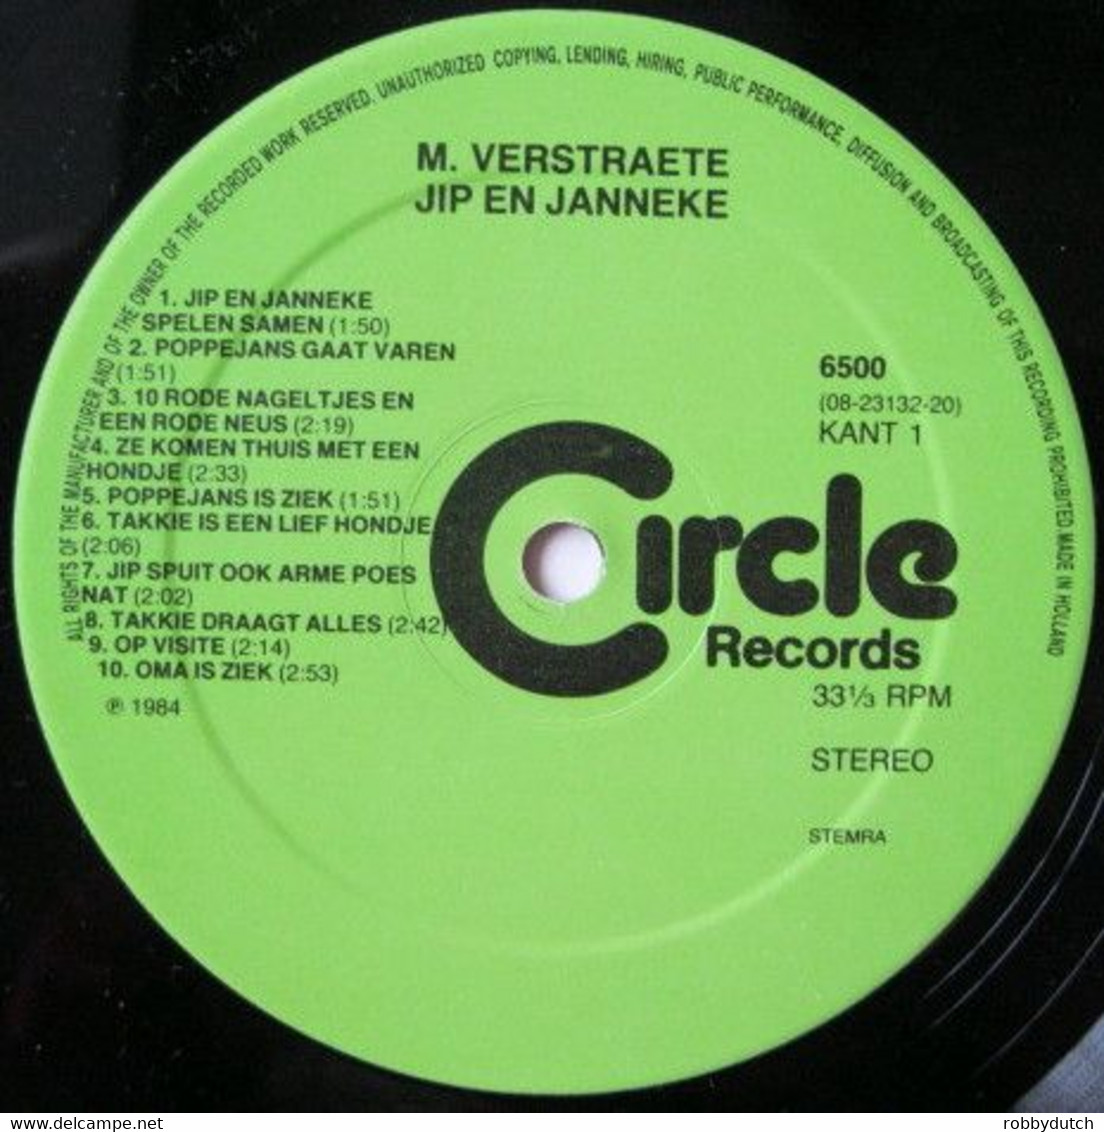 * LP * ANNIE M.G. SCHMIDT - JIP En JANNEKE (Holland 1984) - Enfants